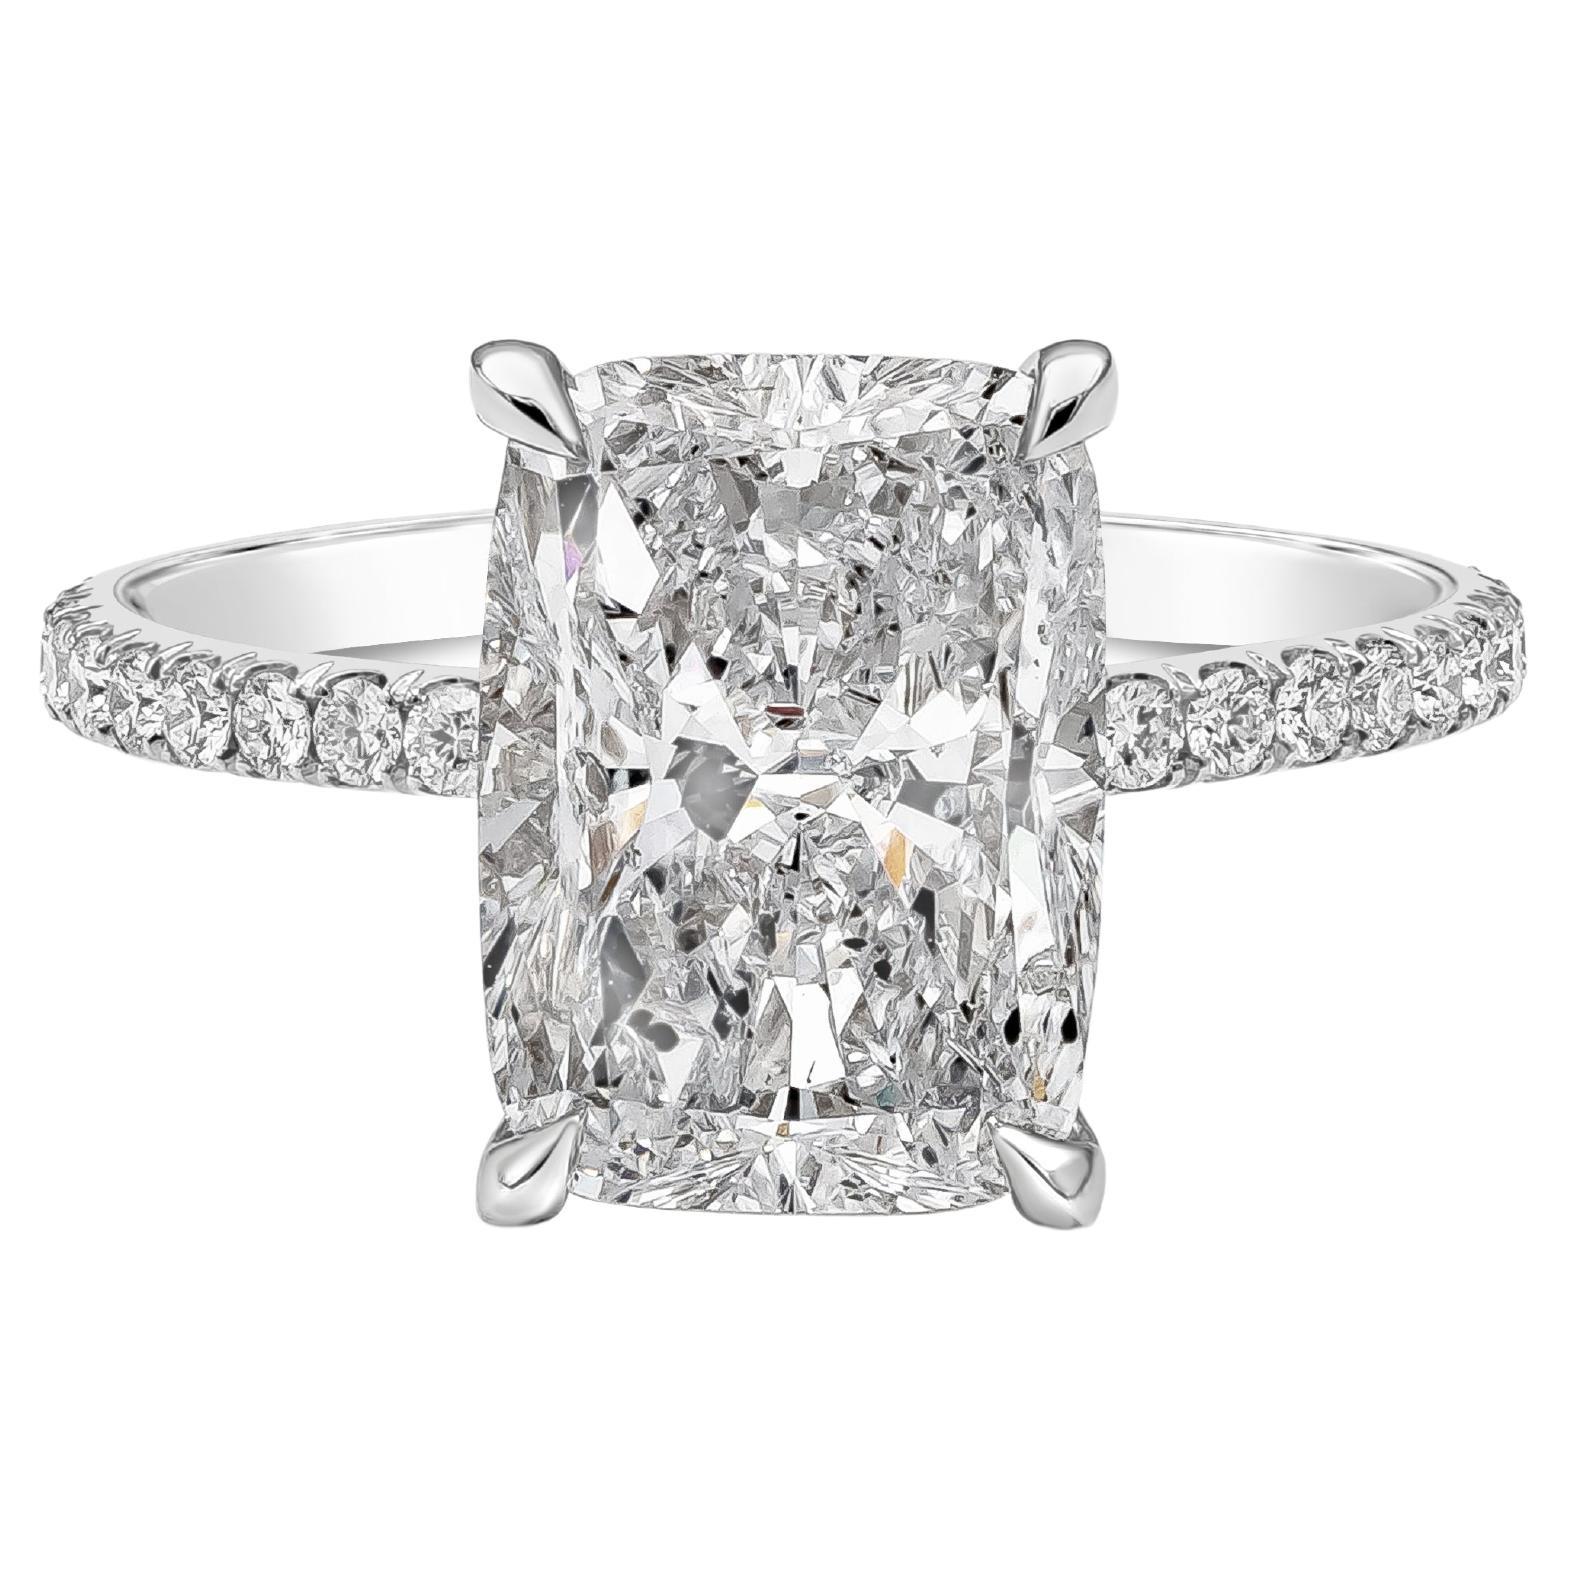 GIA Certified 4.02 Carat Elongated Cushion Cut Diamond Engagement Ring